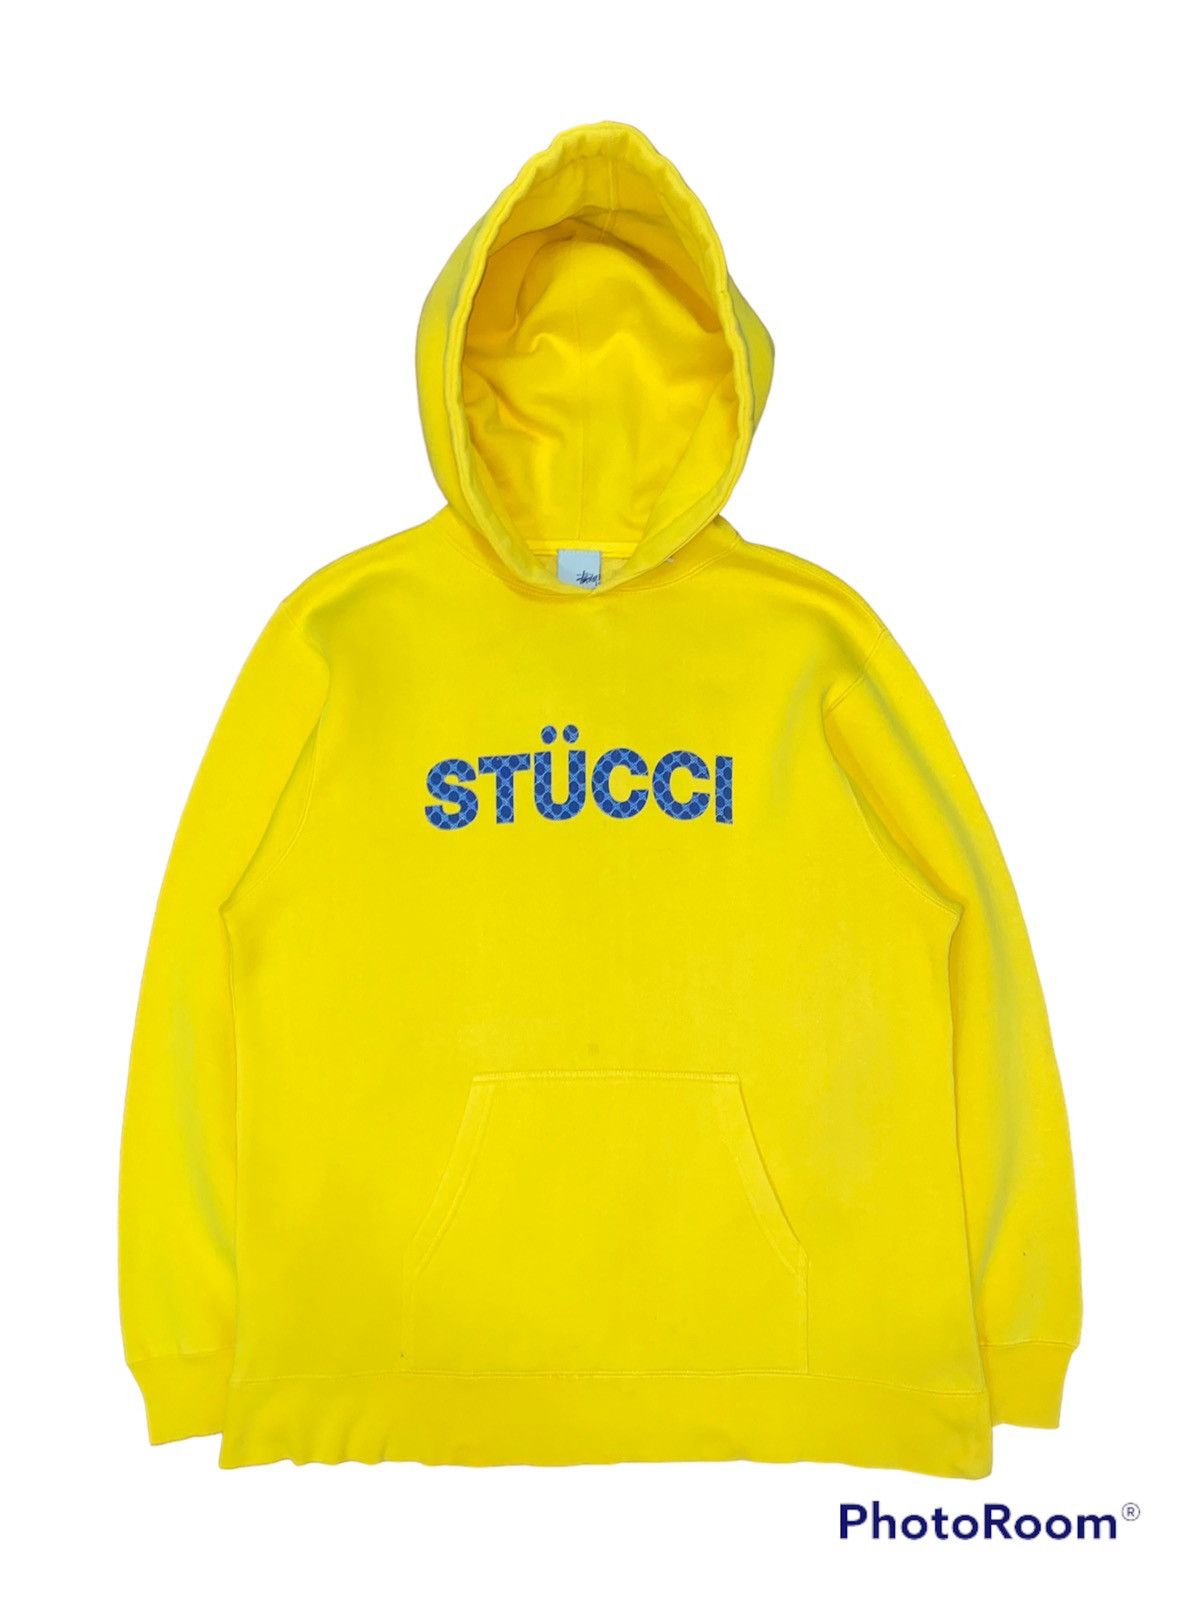 Stussy Gucci Logo SVG - Gravectory